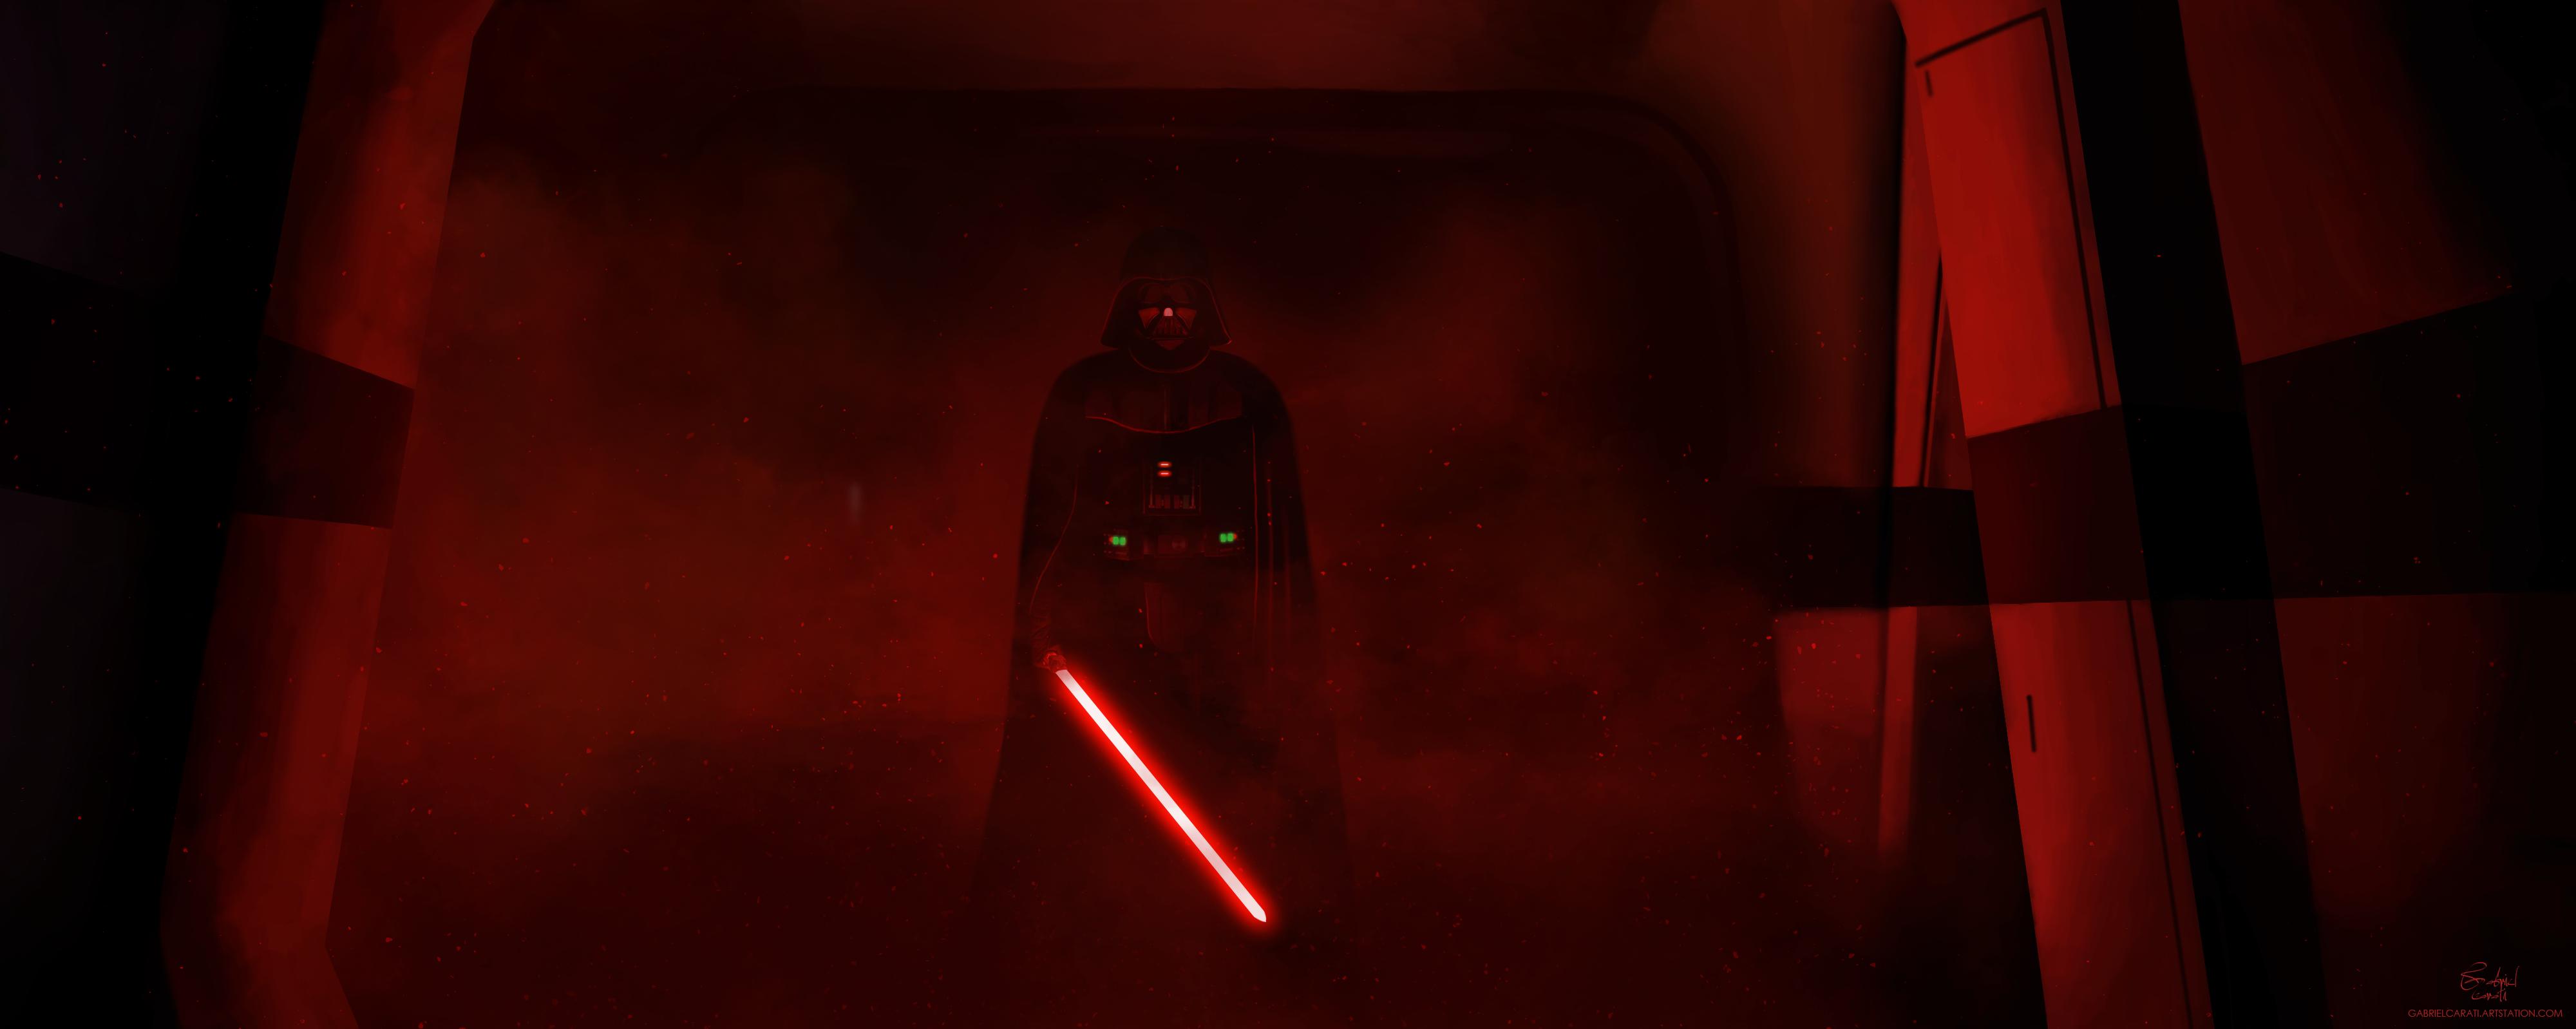 Darth Vader HD Wallpaper | Background Image | 4000x1598 | ID:813002